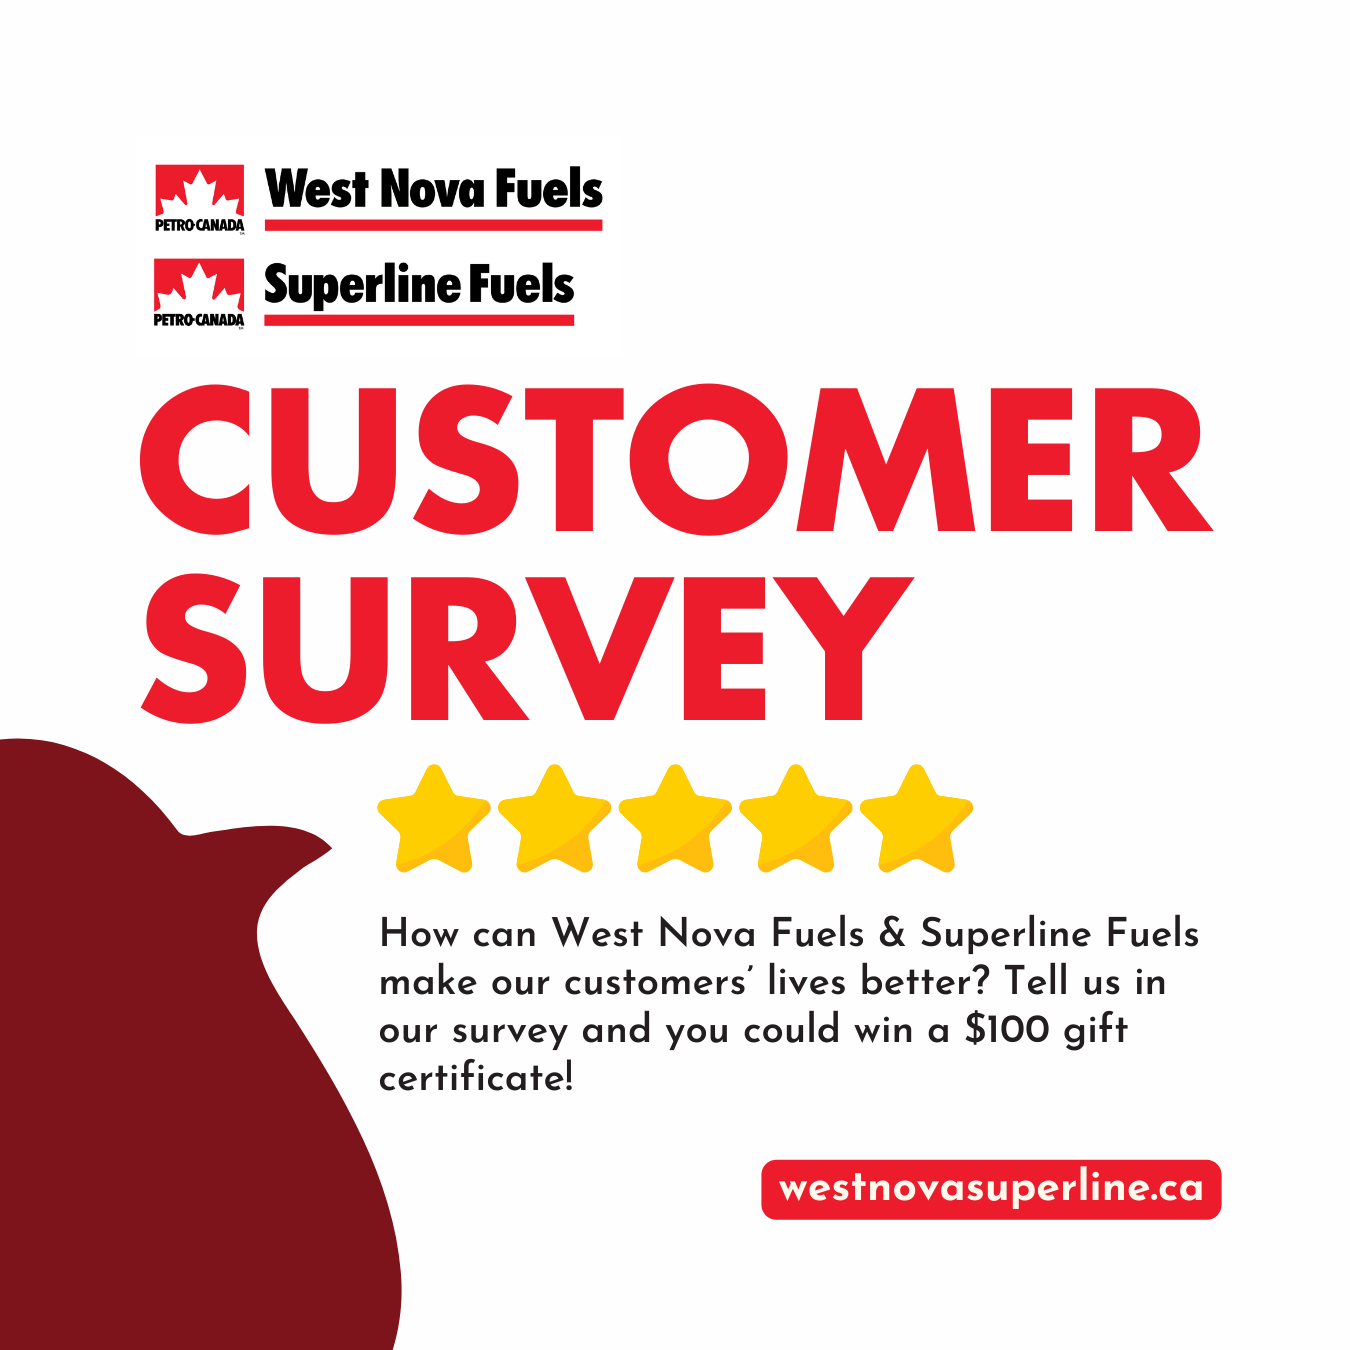 WSF - Customer Survey